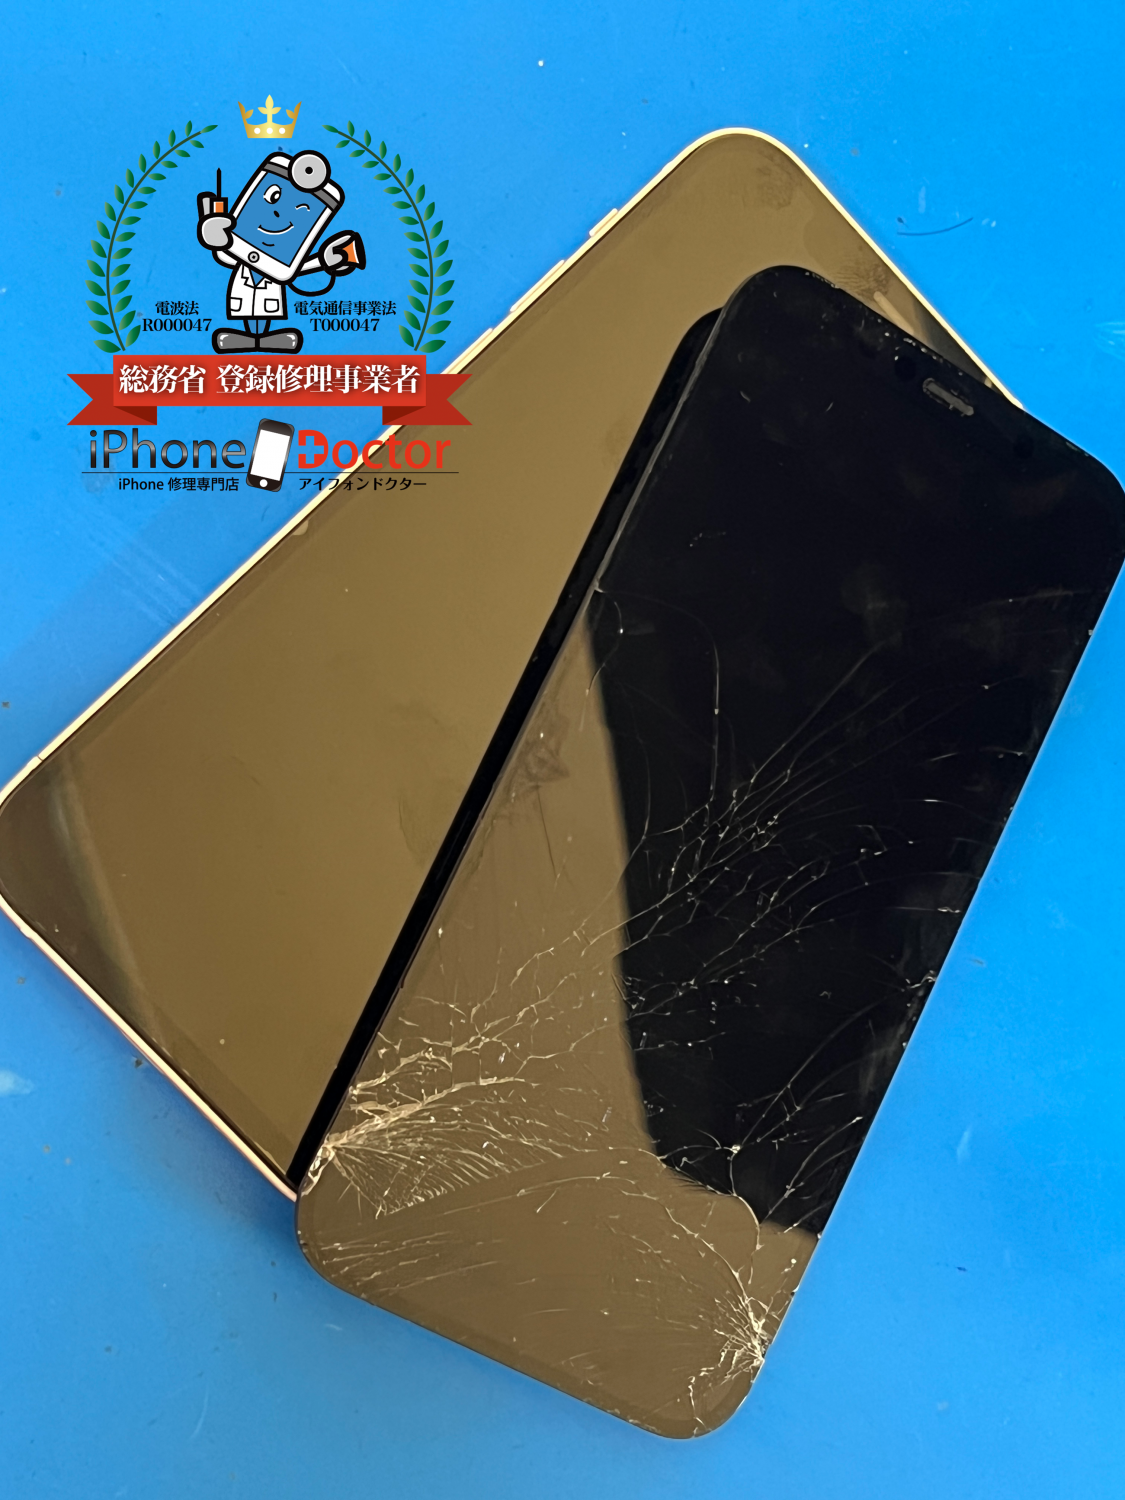 iPhone12 Proガラス割れ、液晶破損